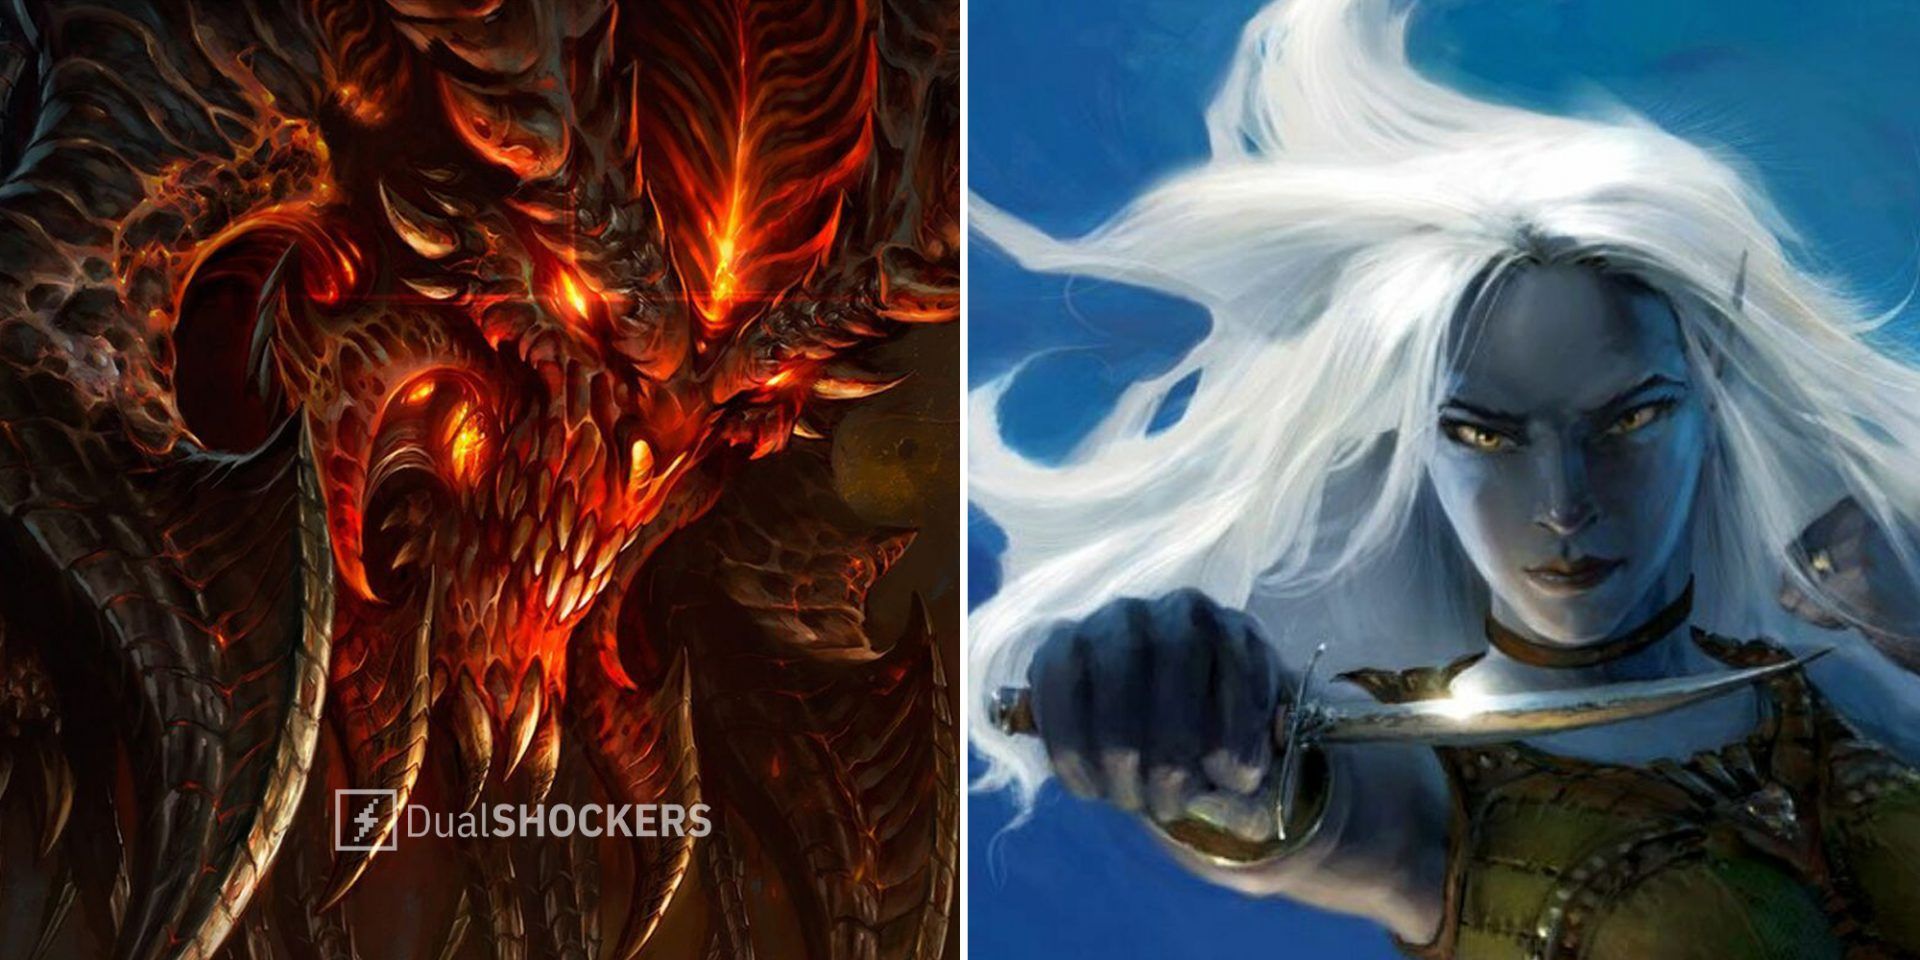 Diablo 3 demon promo art on left, Baldur's Gate: Dark Alliance 2 on right